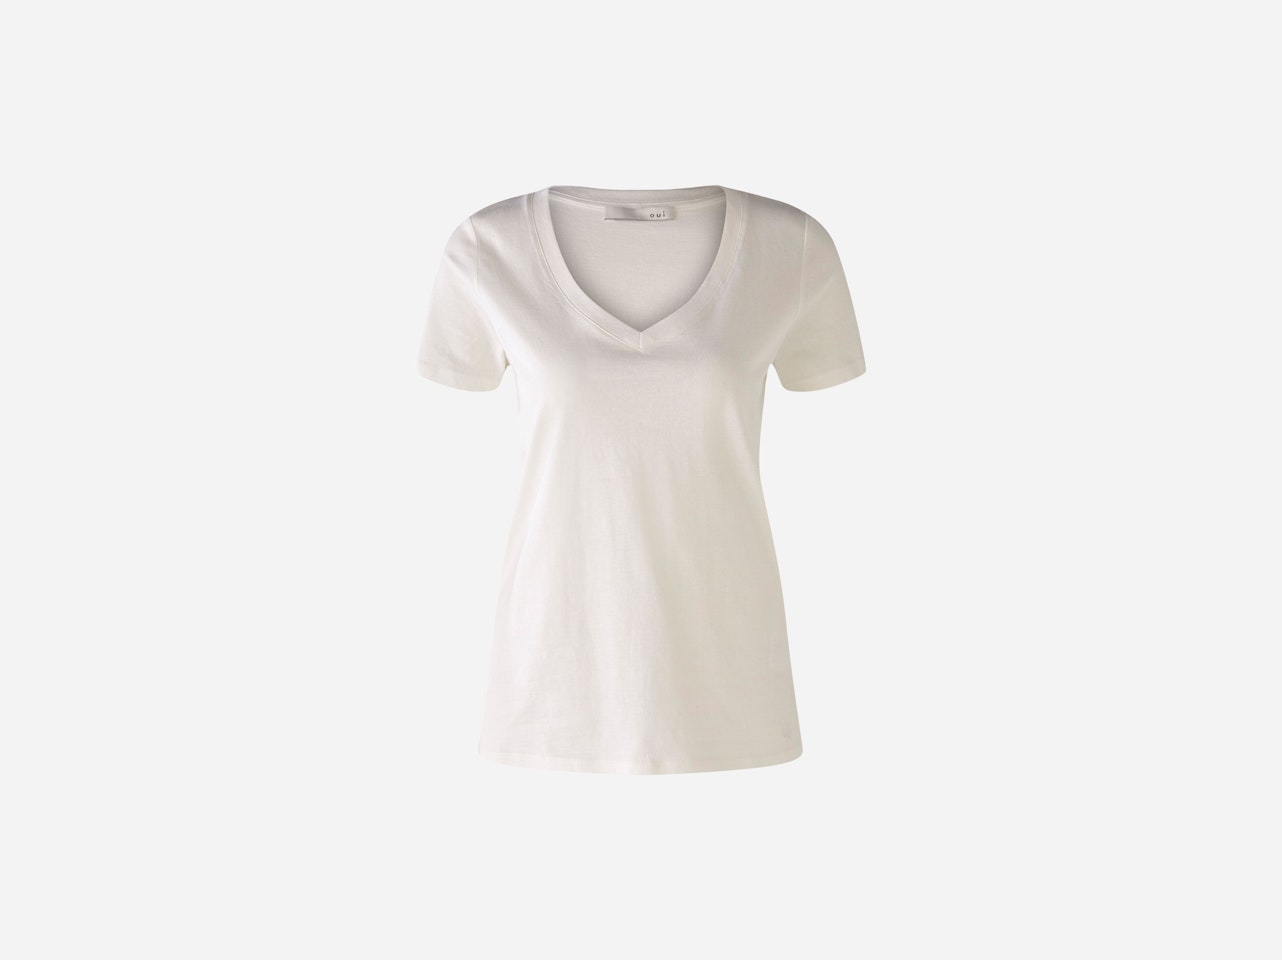 Bild 7 von CARLI T-shirt 100% organic cotton in cloud dancer | Oui